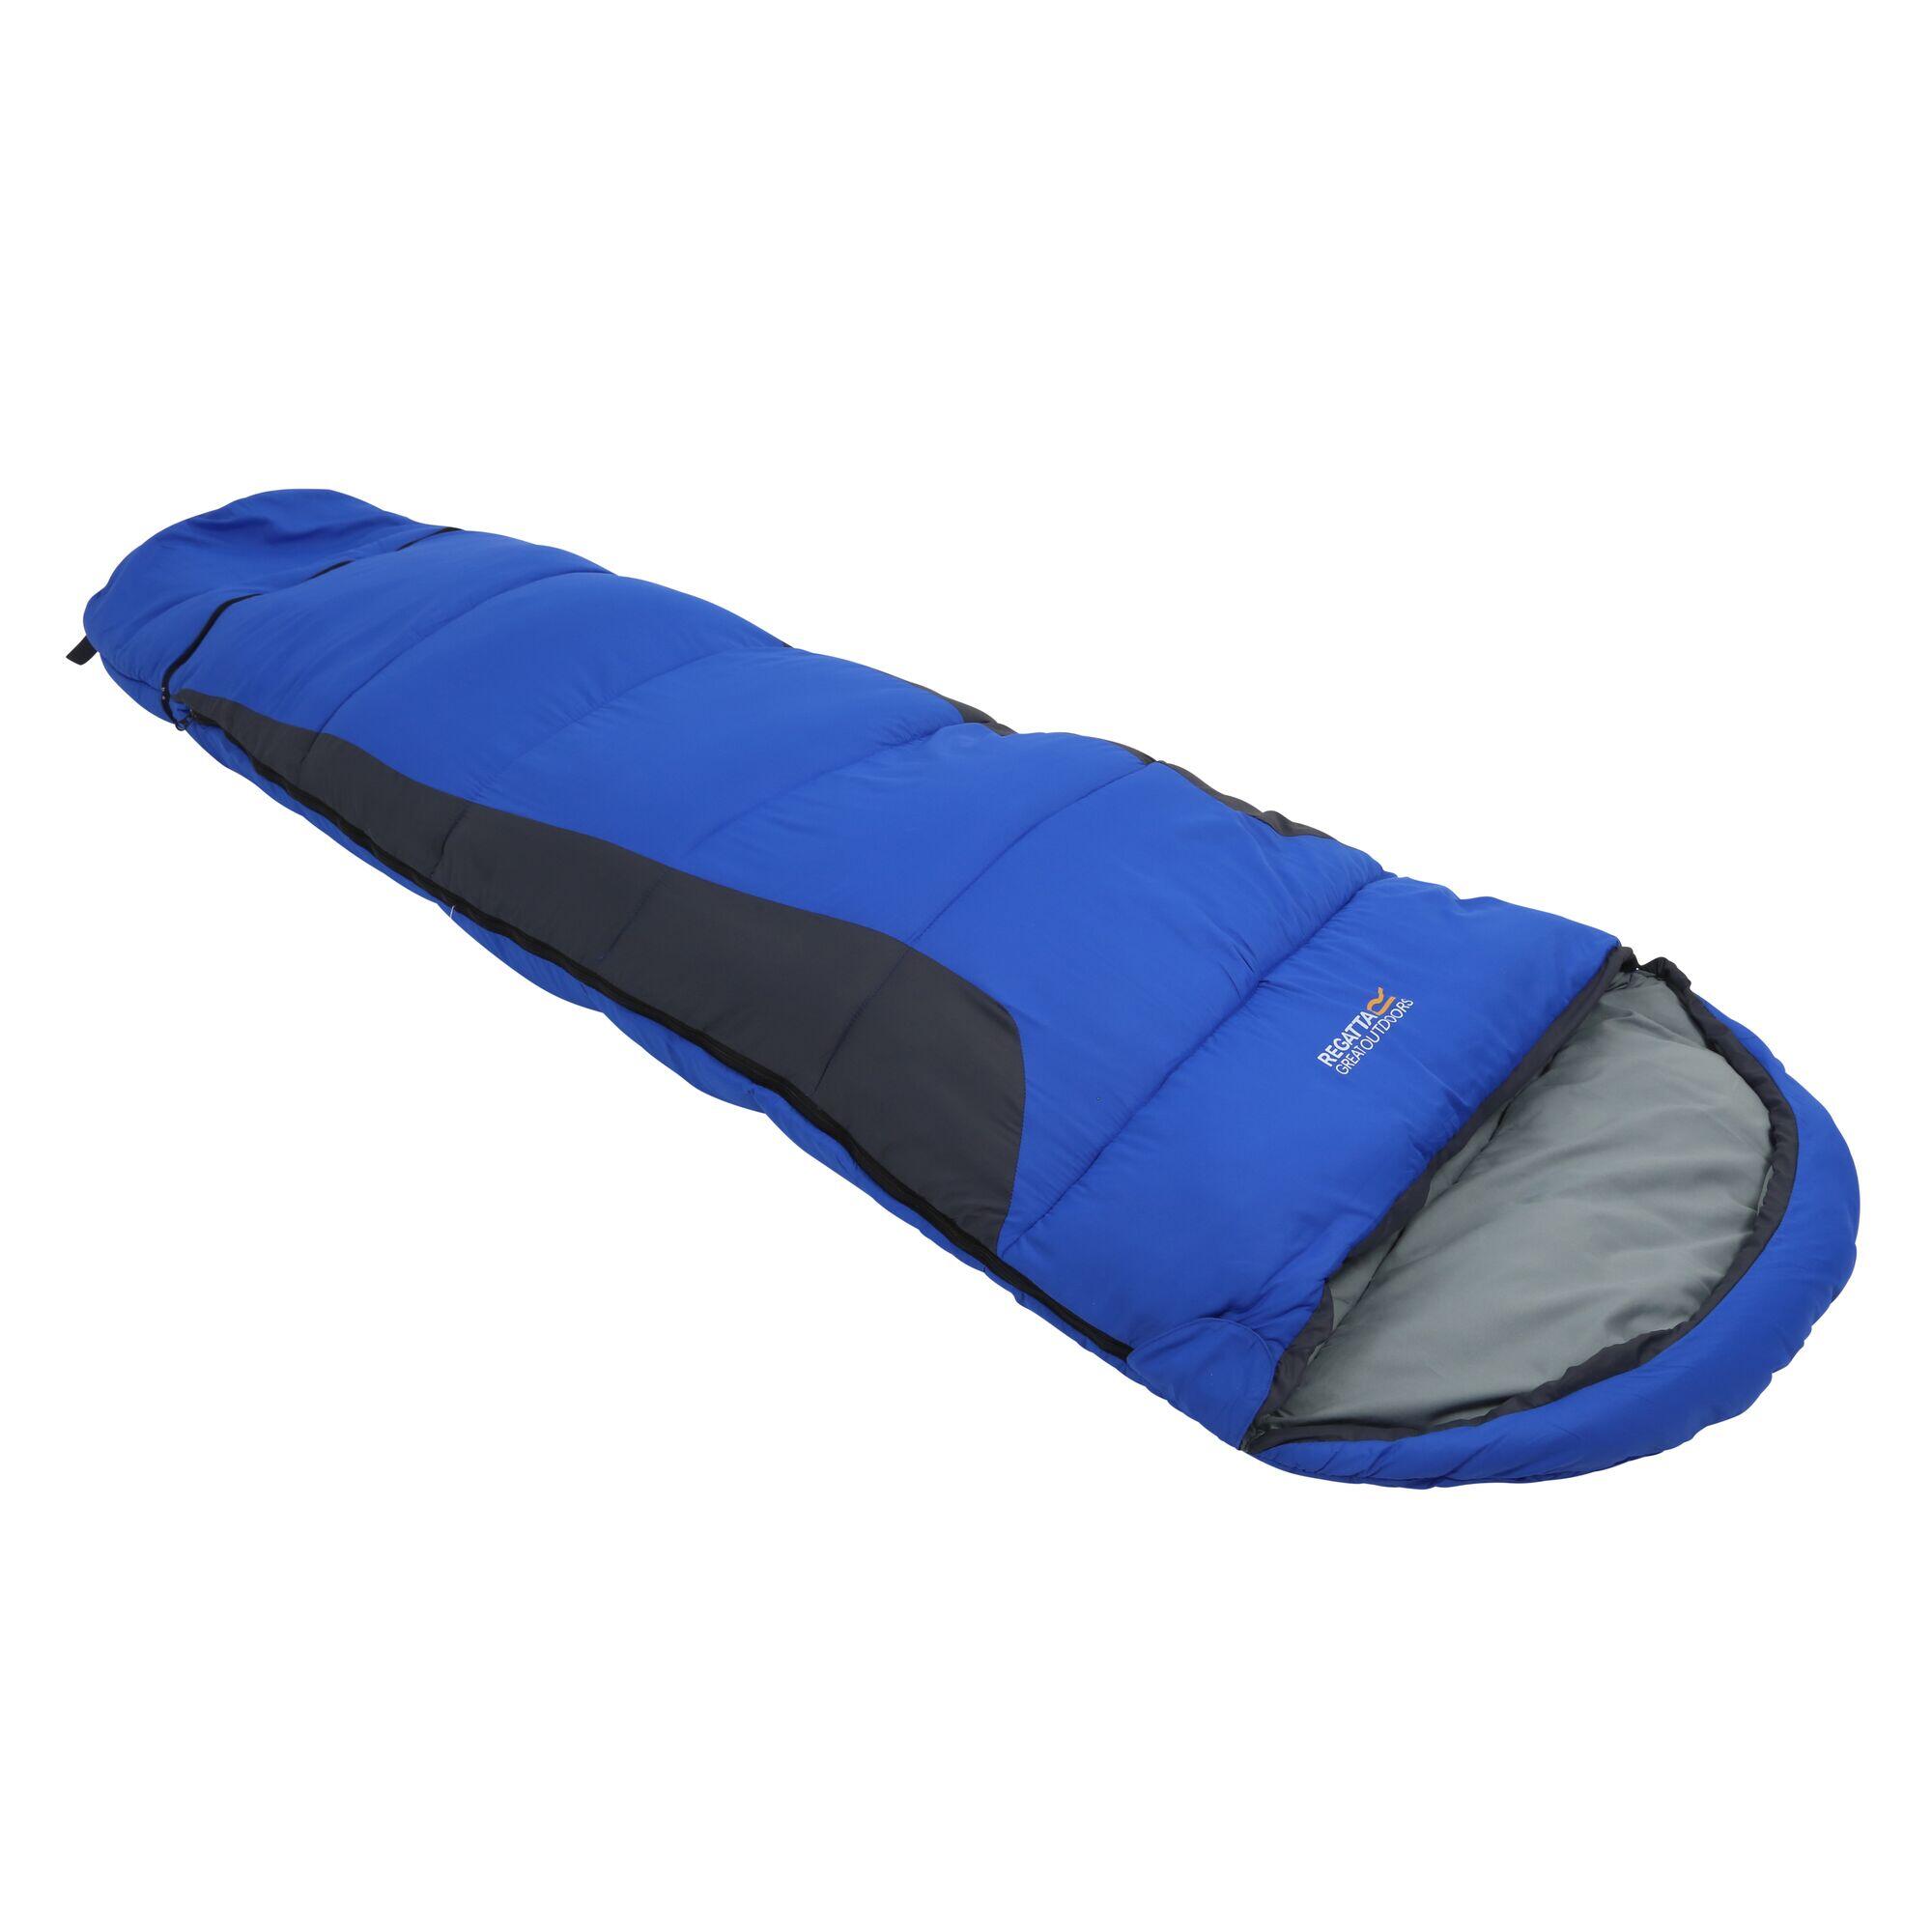 REGATTA Hilo Boost Adults' Camping Sleeping Bag - Oxford Blue Ebony